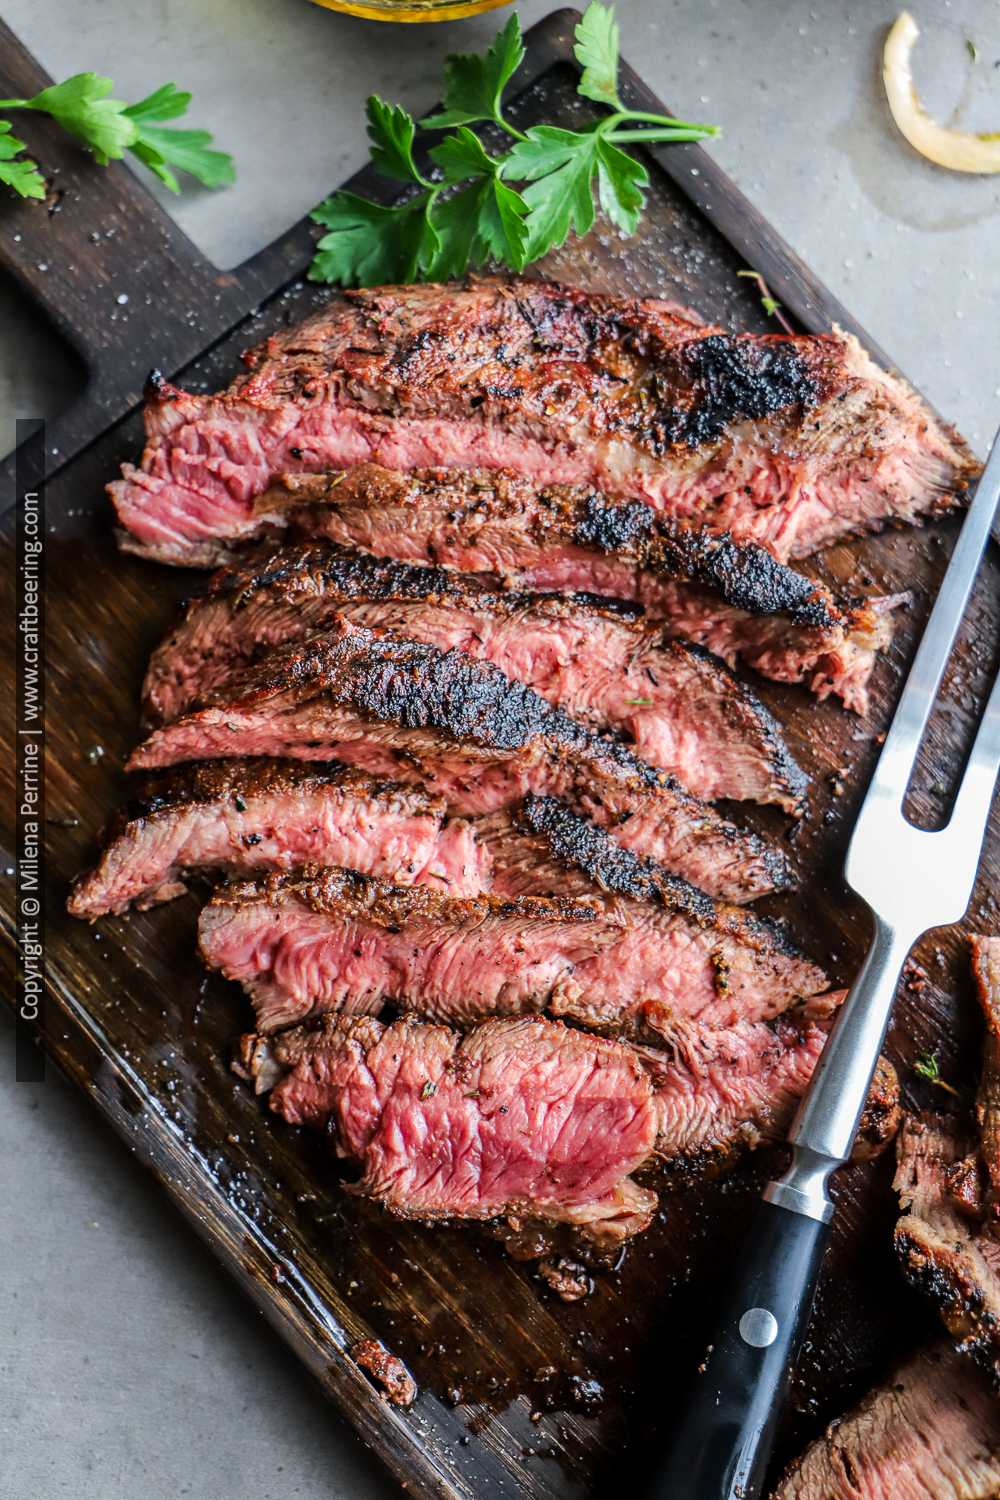 Grilled flat iron steak medium-rare.